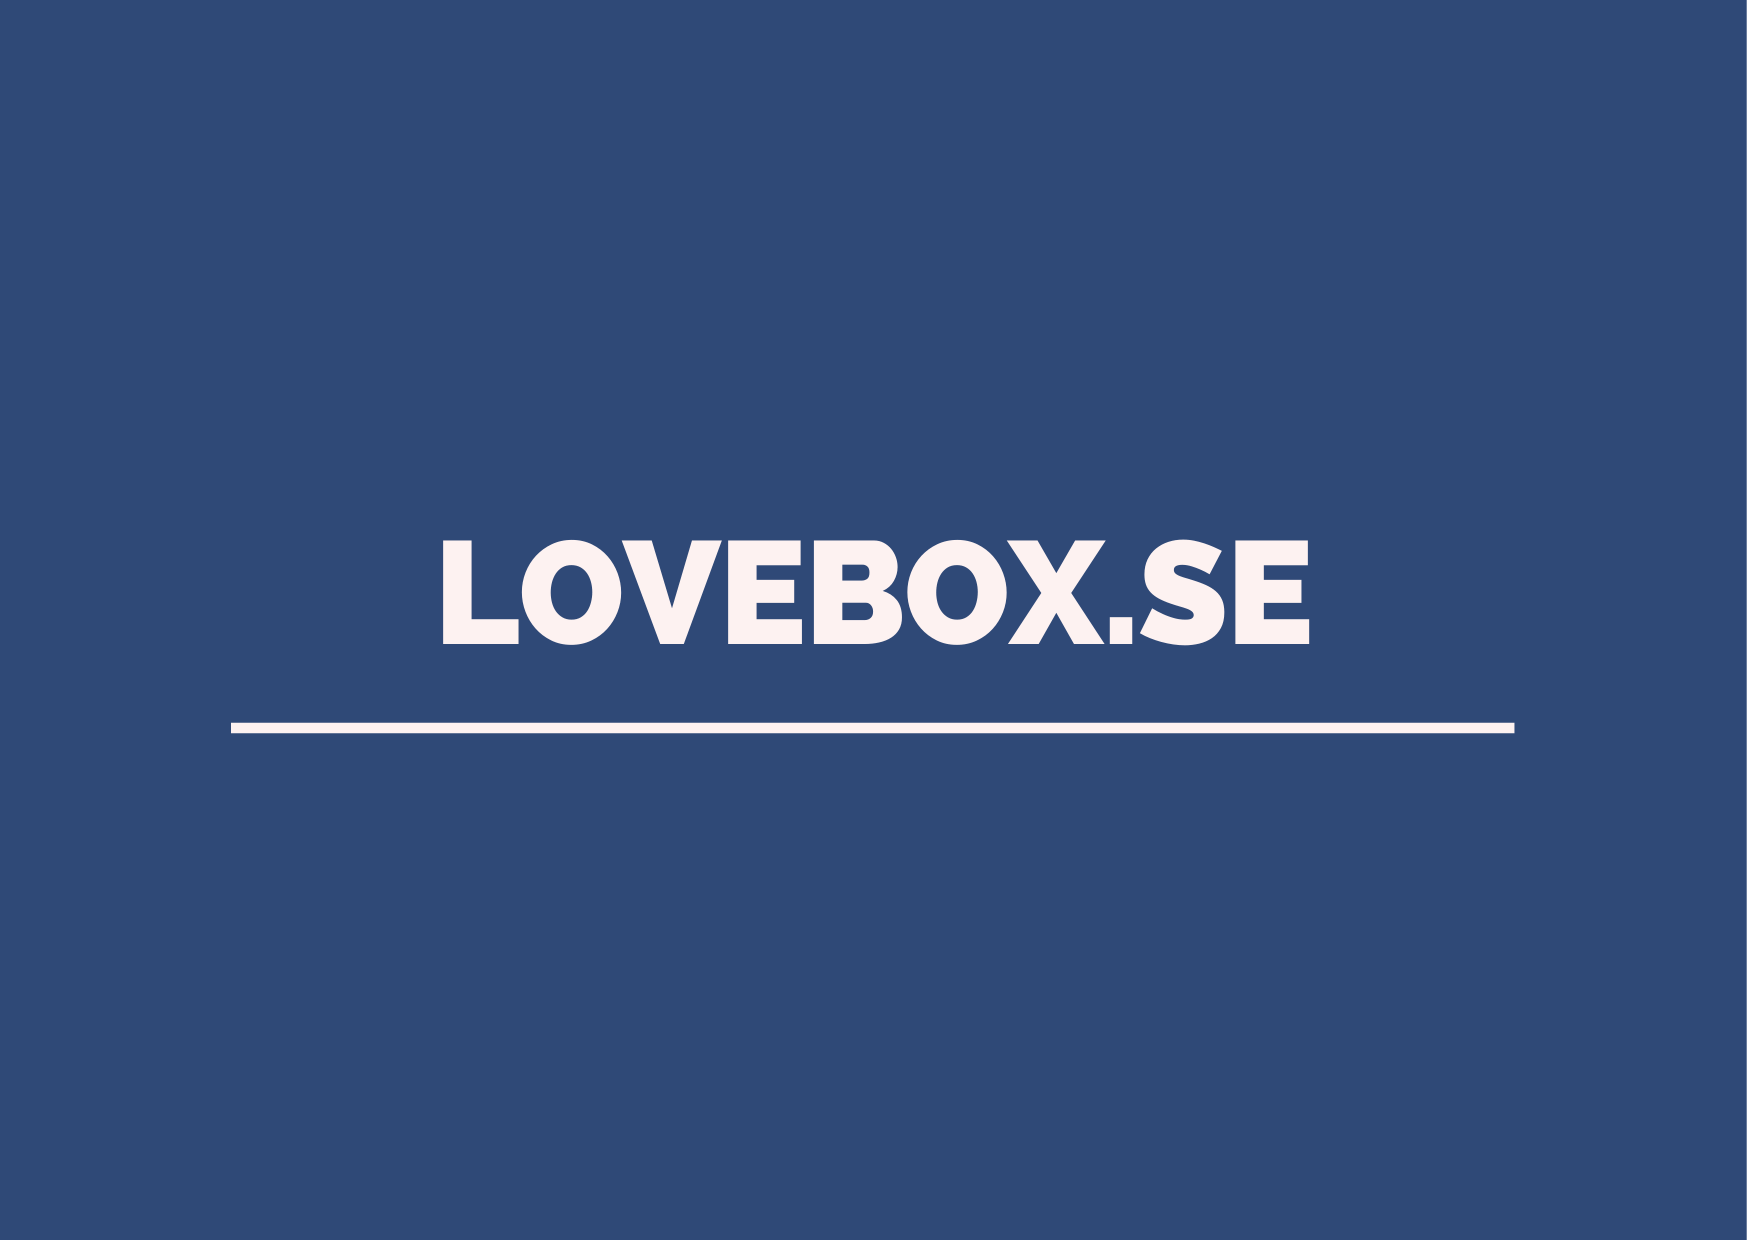 lovebox.se text